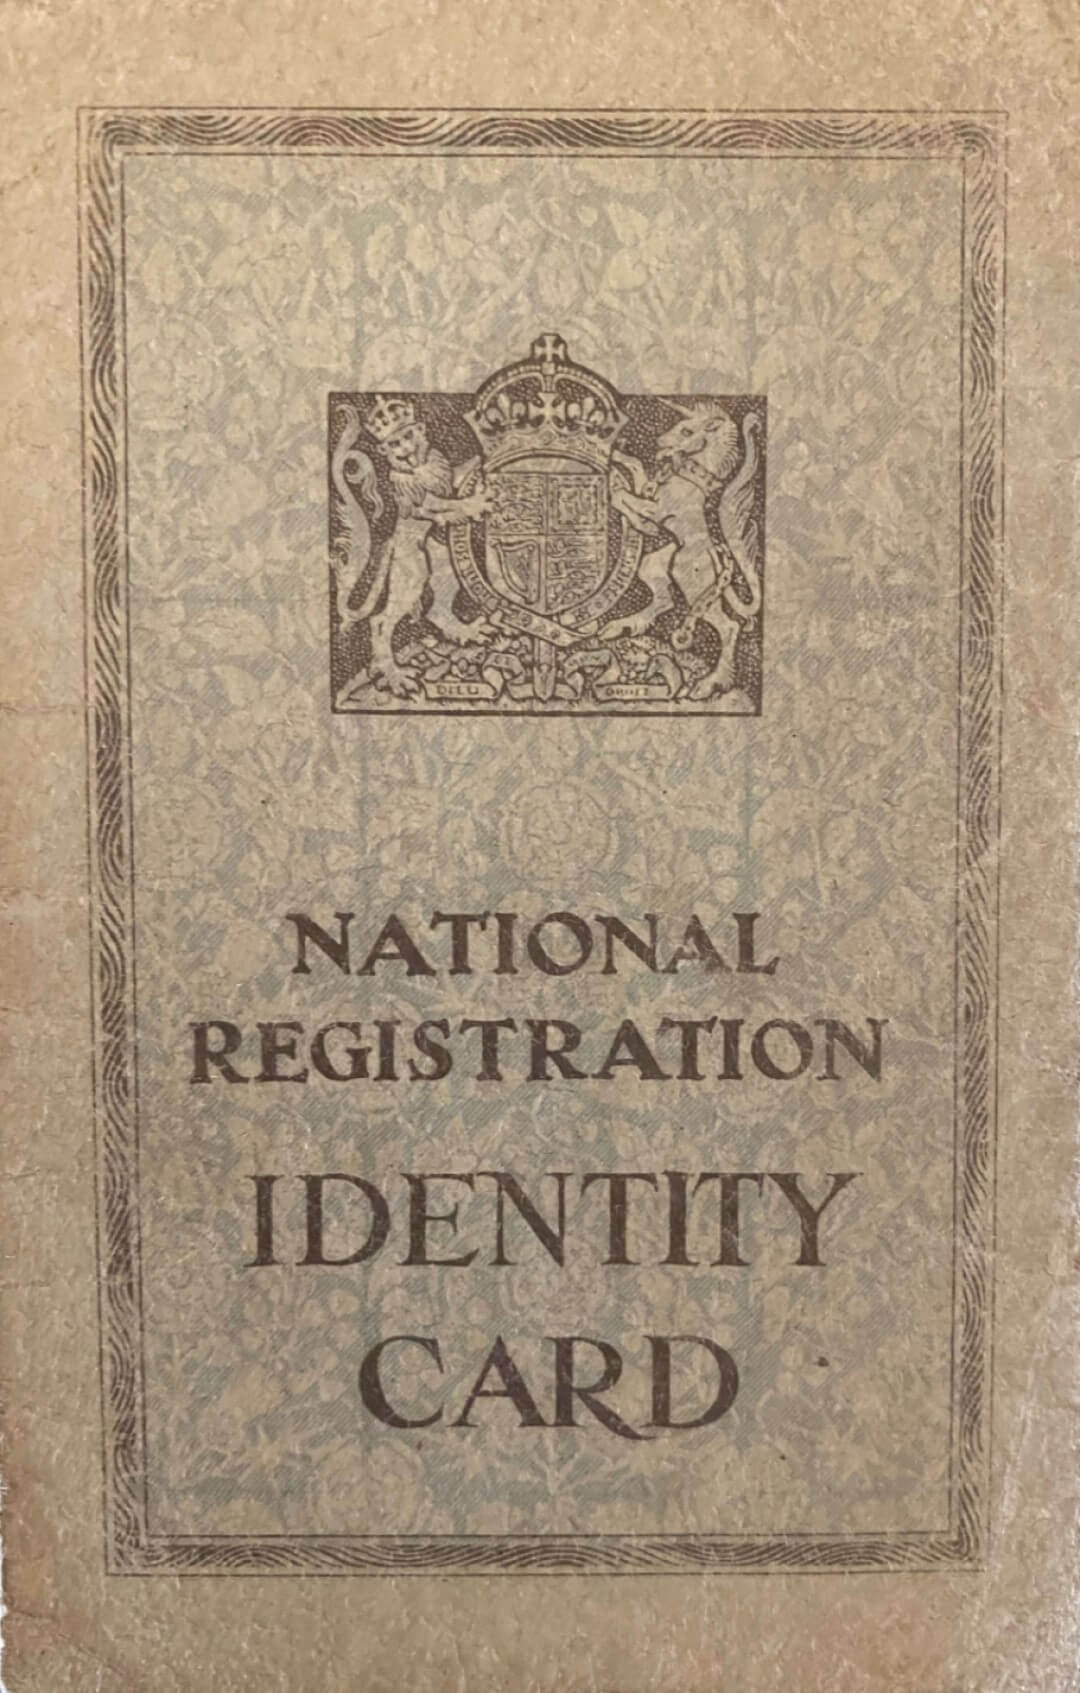 A National Registration Identity Card